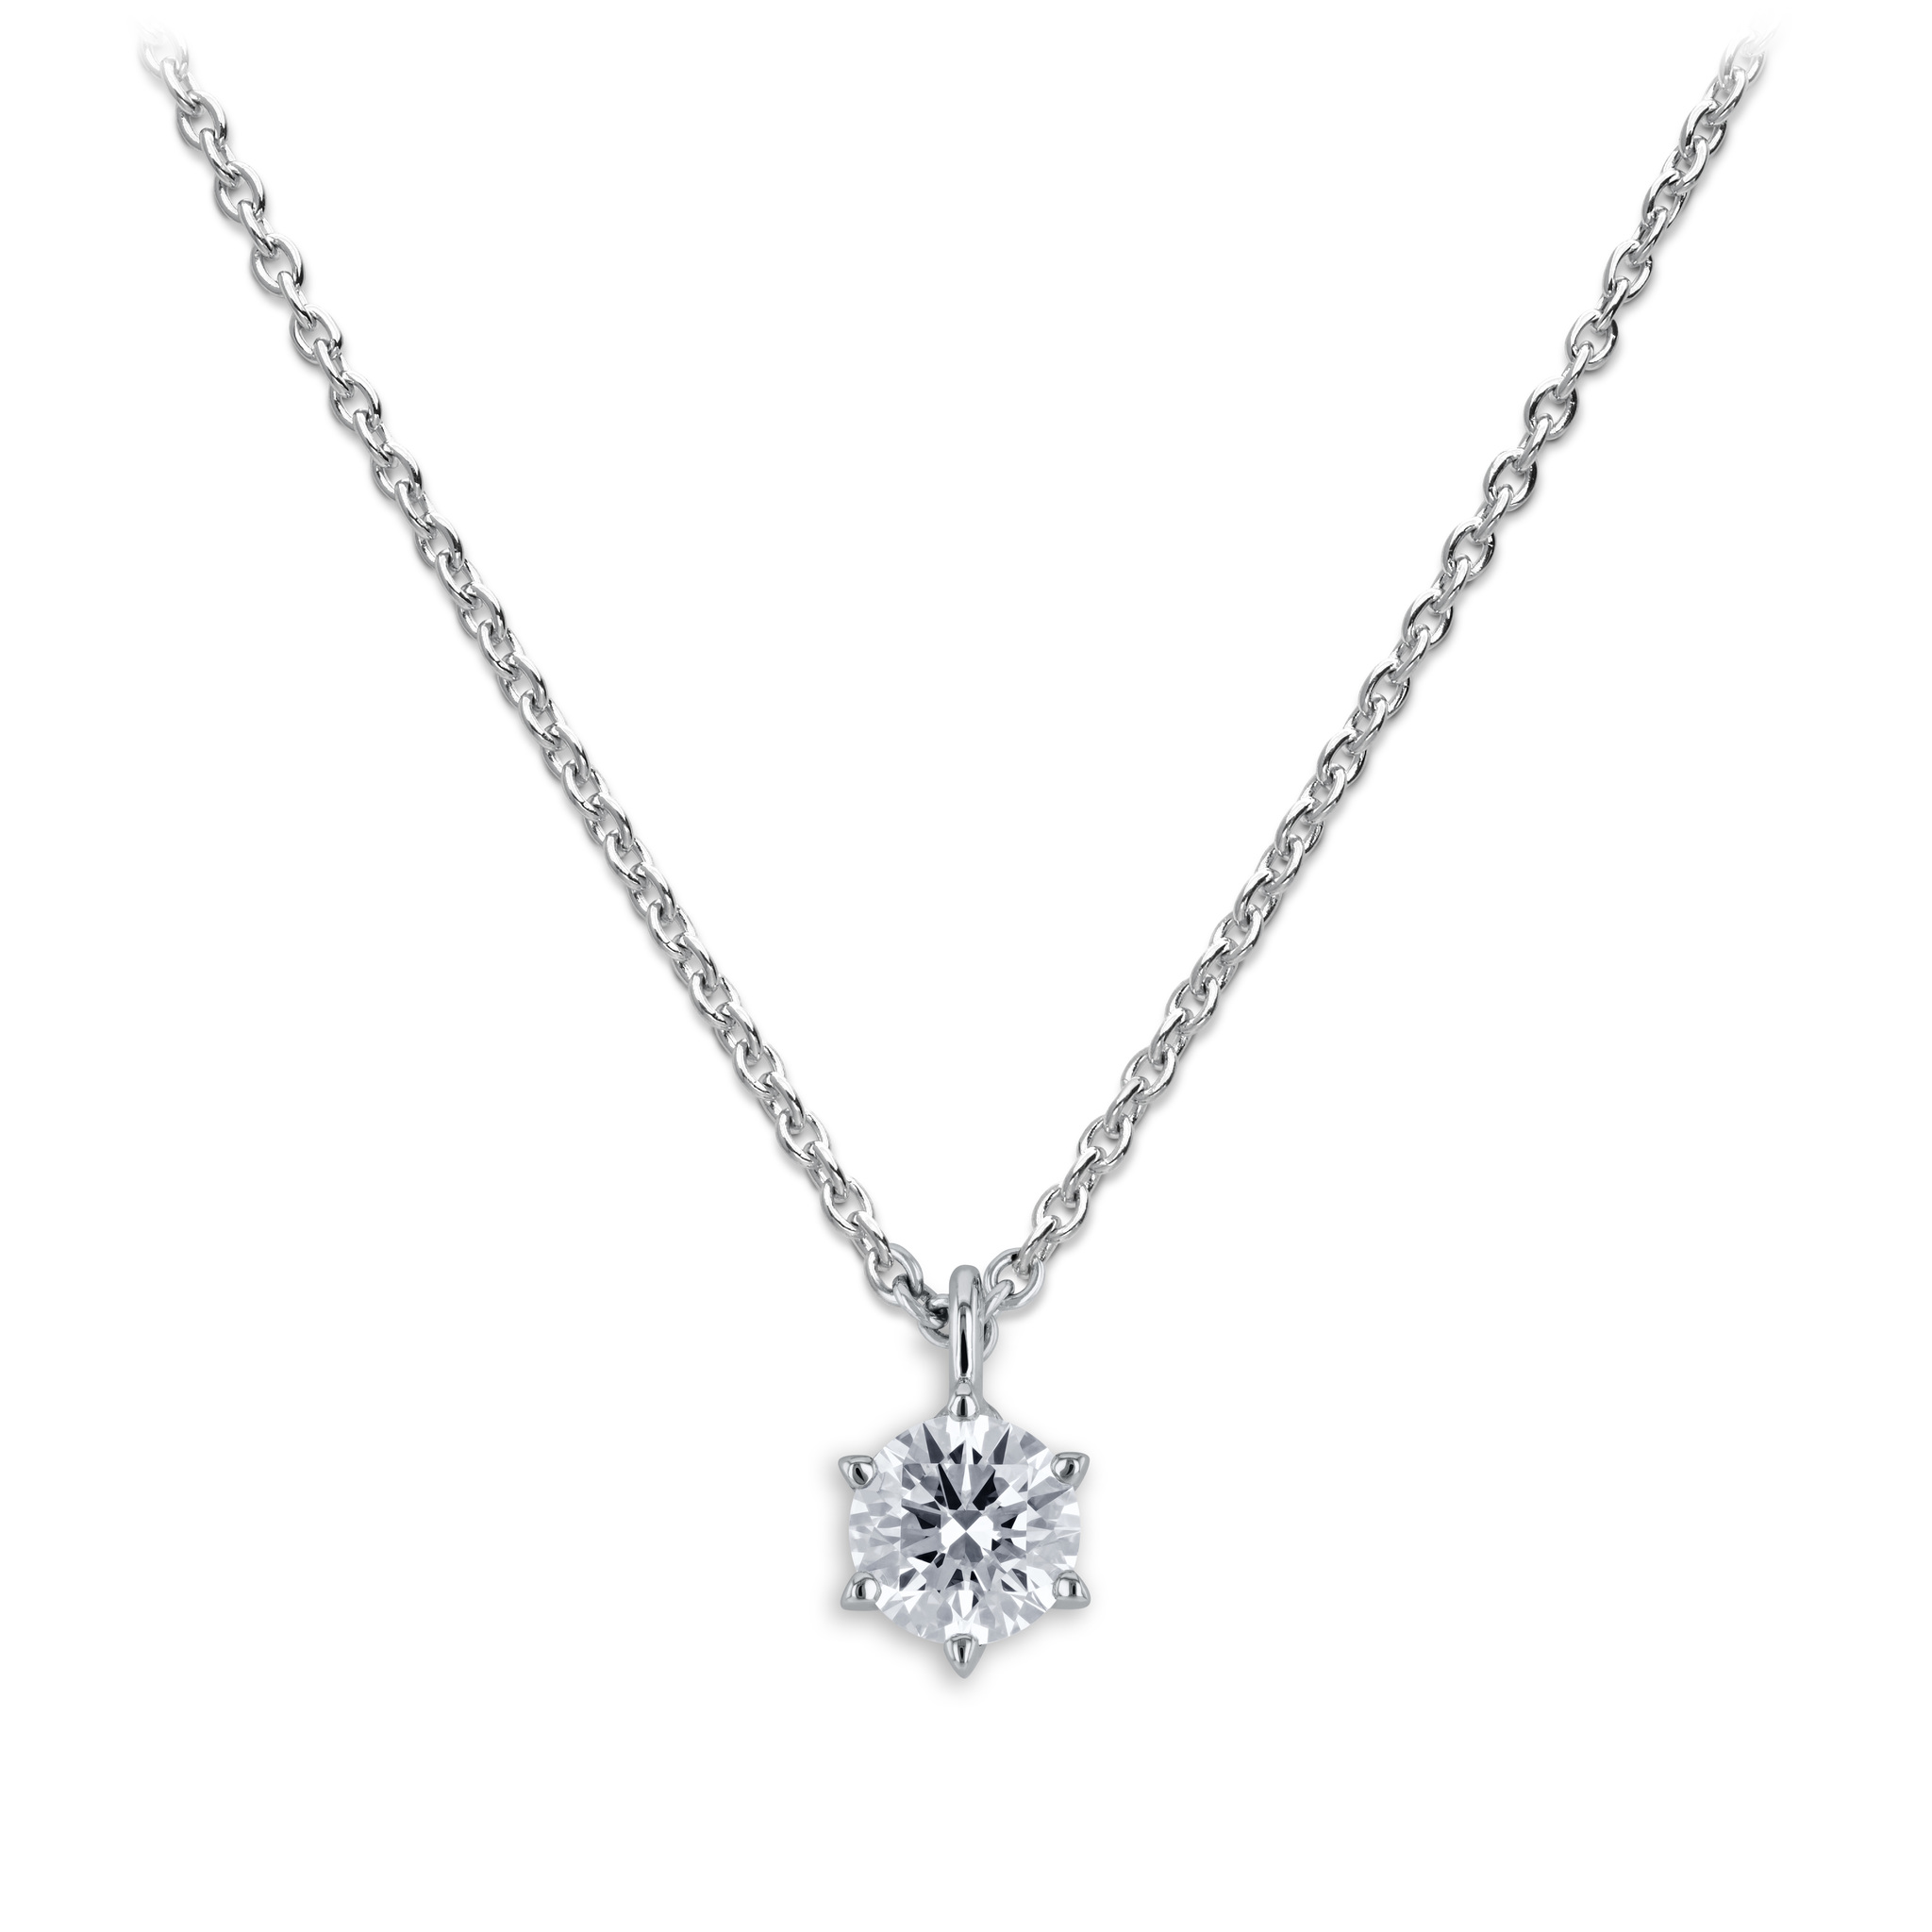 Solitaire diamond necklace